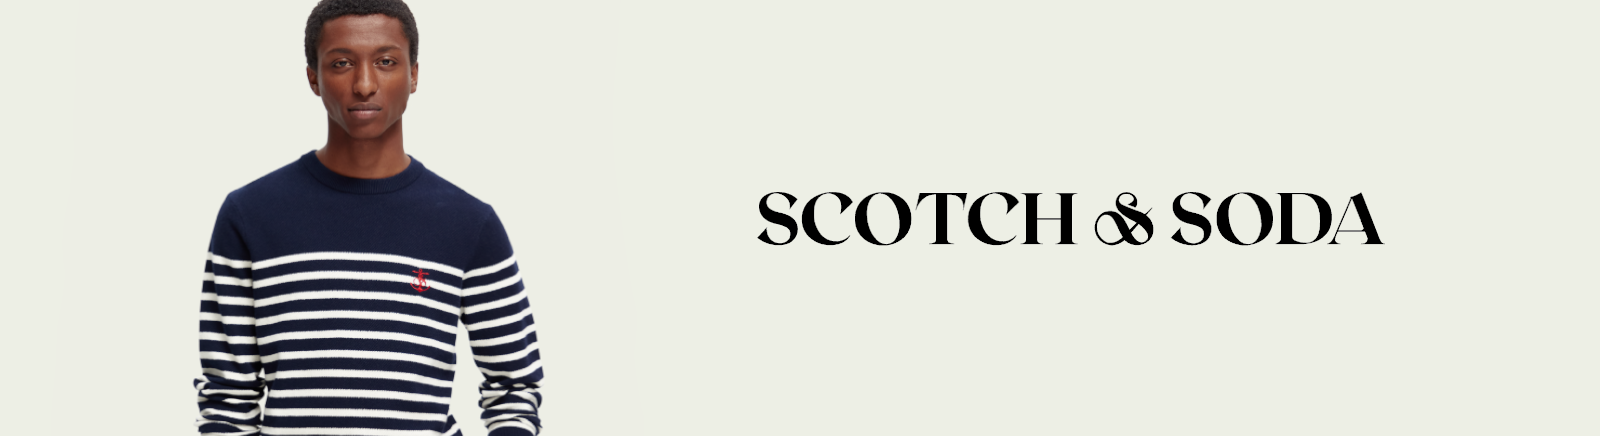 Scotch & Soda Herrenschuhe online kaufen im GISY Schuhe Shop